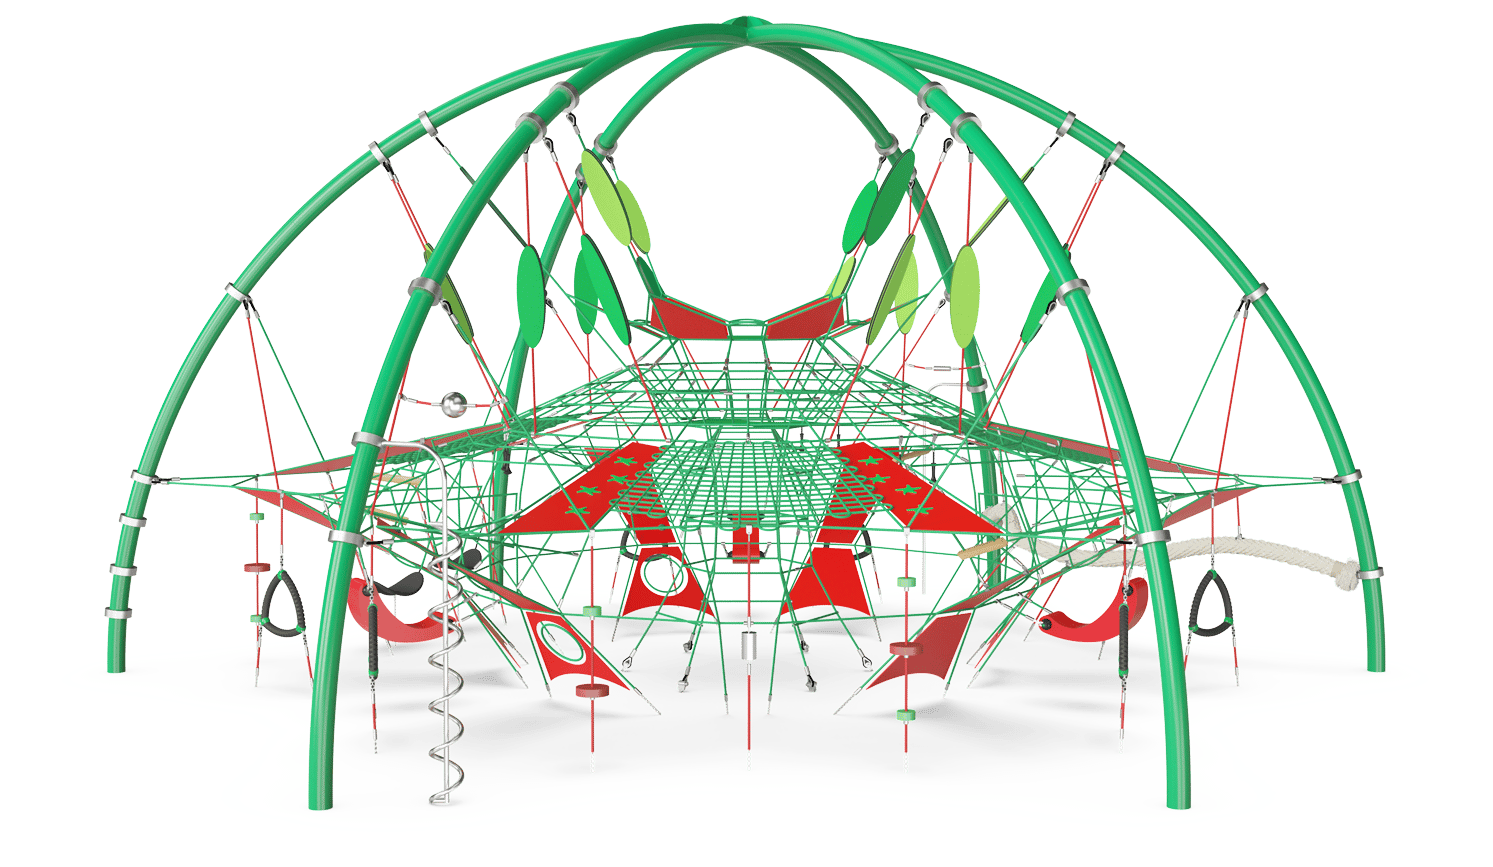 Klimtoestel - Giant Dome